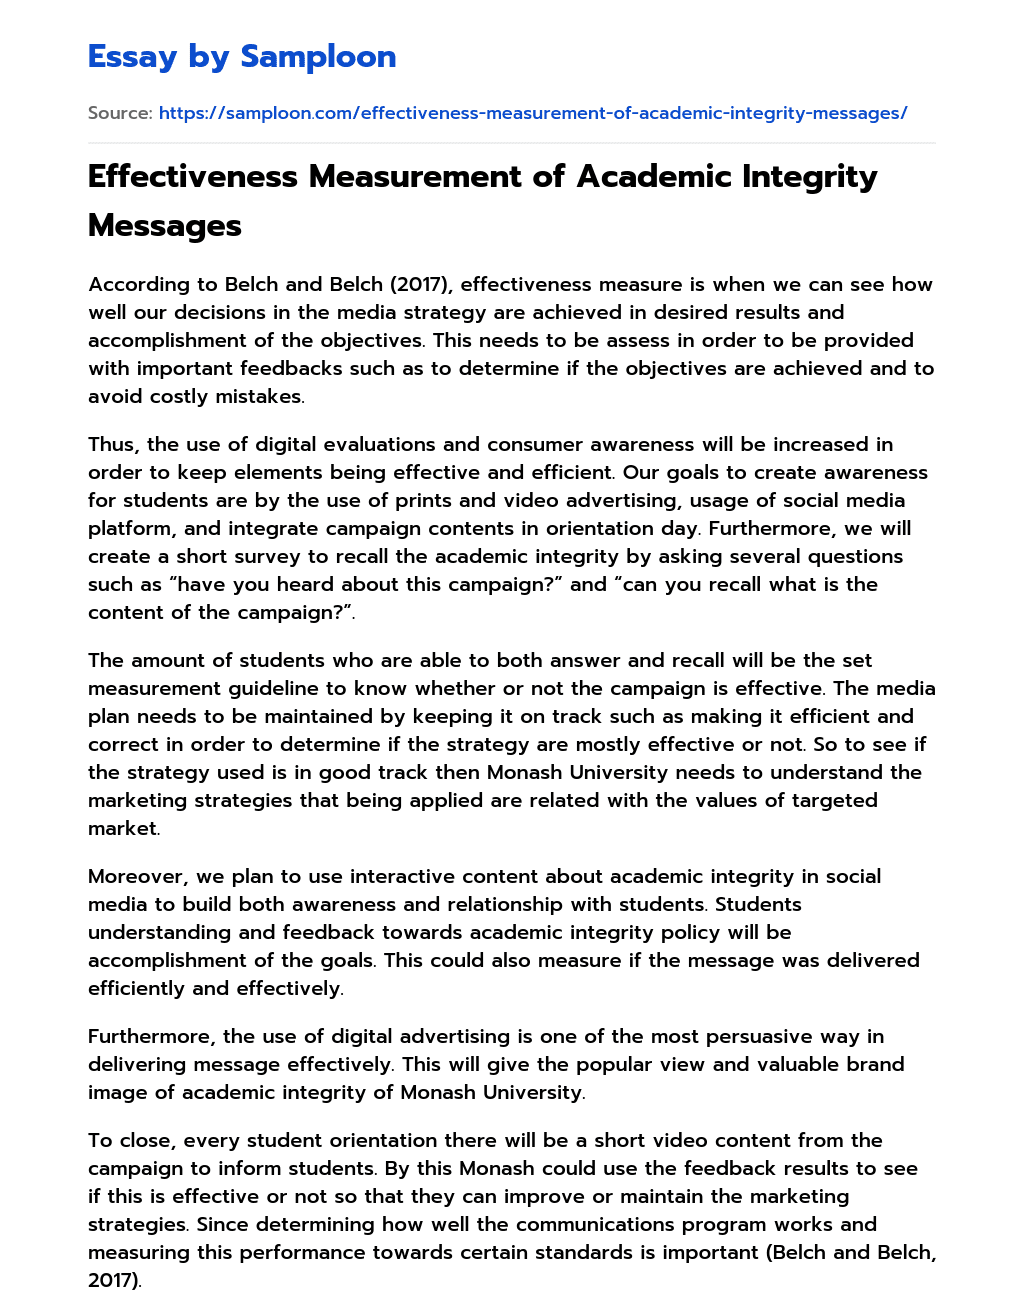 Effectiveness Measurement of Academic Integrity Messages essay